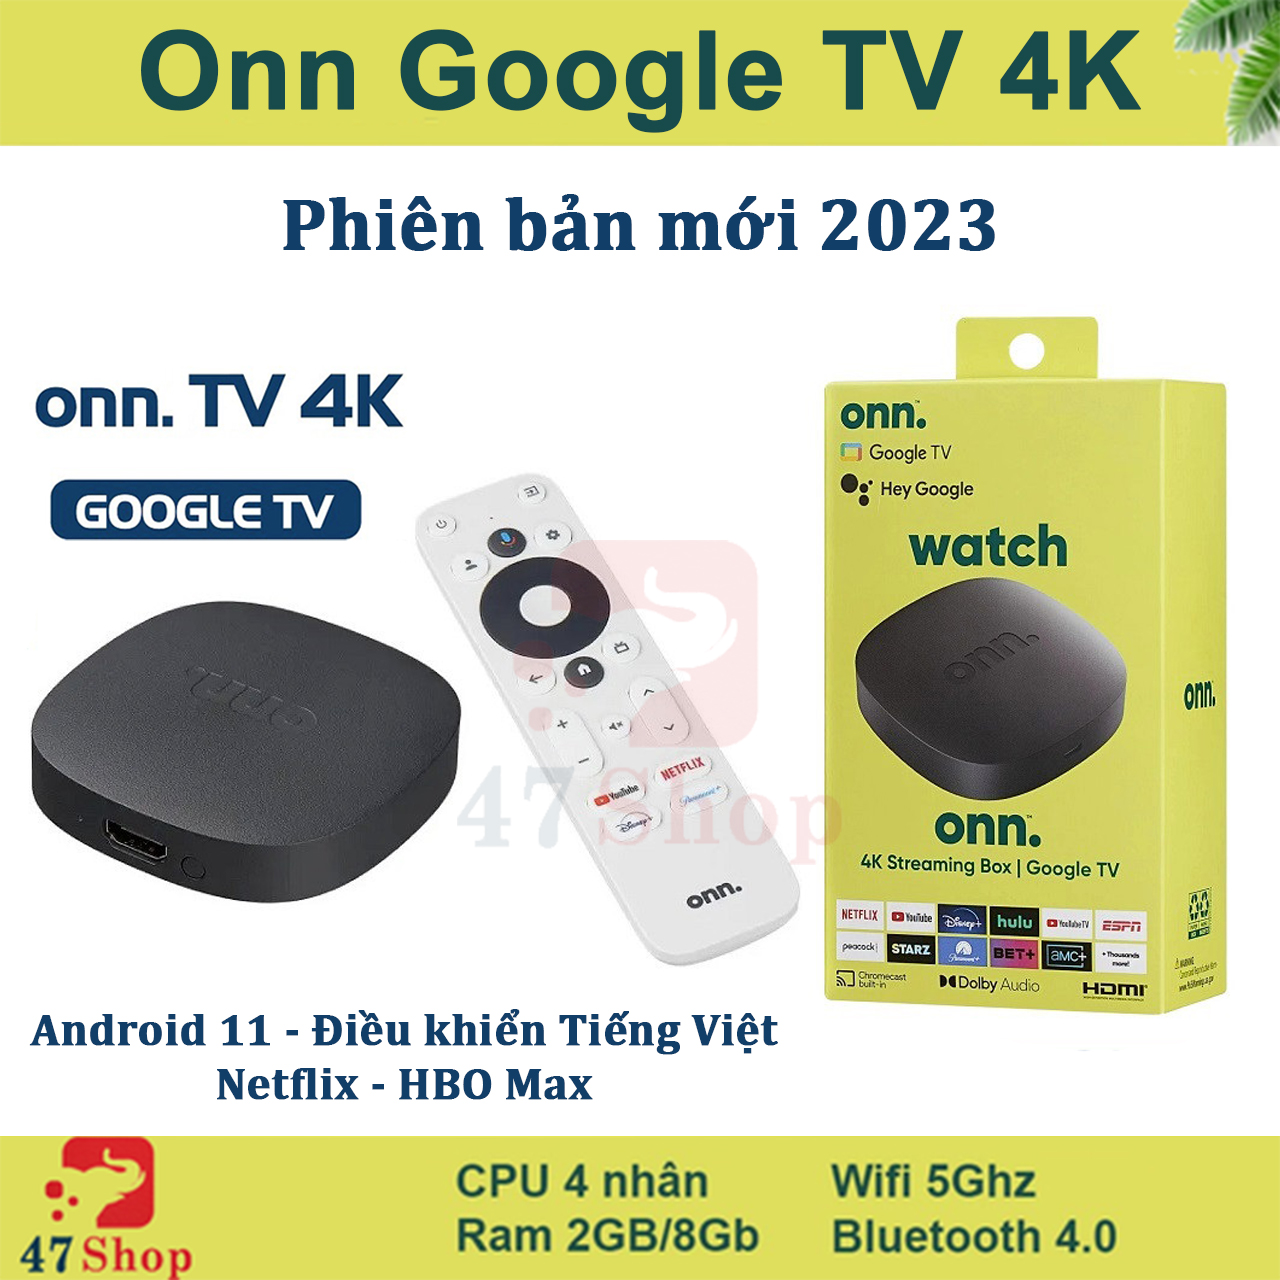 Google Tivi Box Onn Google Box TV Android 11 Remote tìm kiếm Tiếng Việt phát 4K UHD HDR Google Cast Chrome Cast Netflix